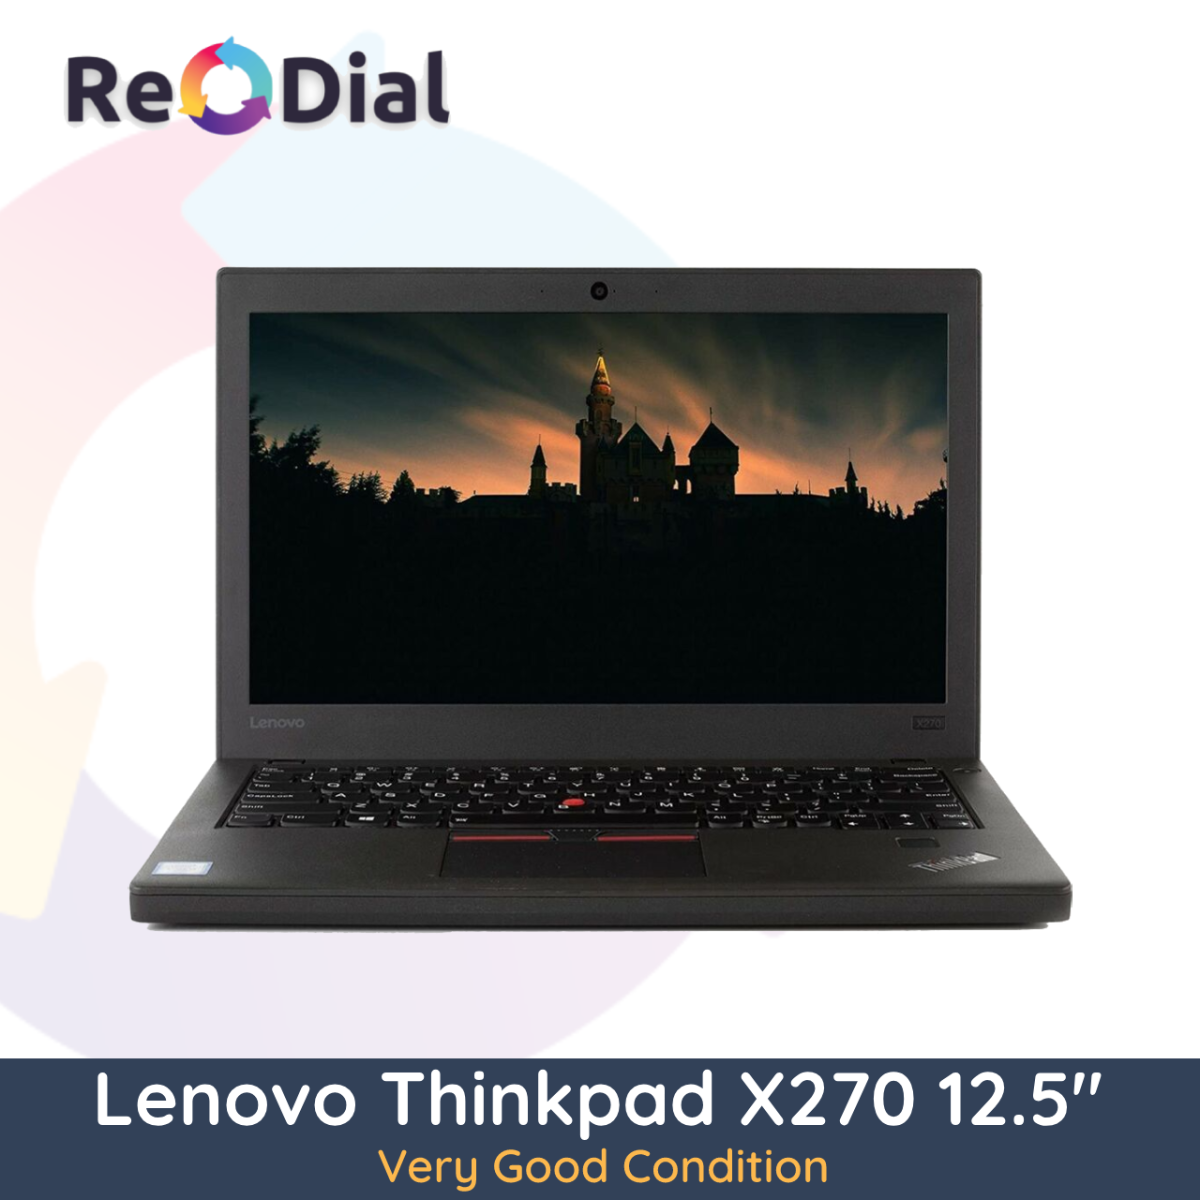 Lenovo ThinkPad X270 12.5" Laptop i5-6300U 500GB 8GB RAM - Very Good Condition